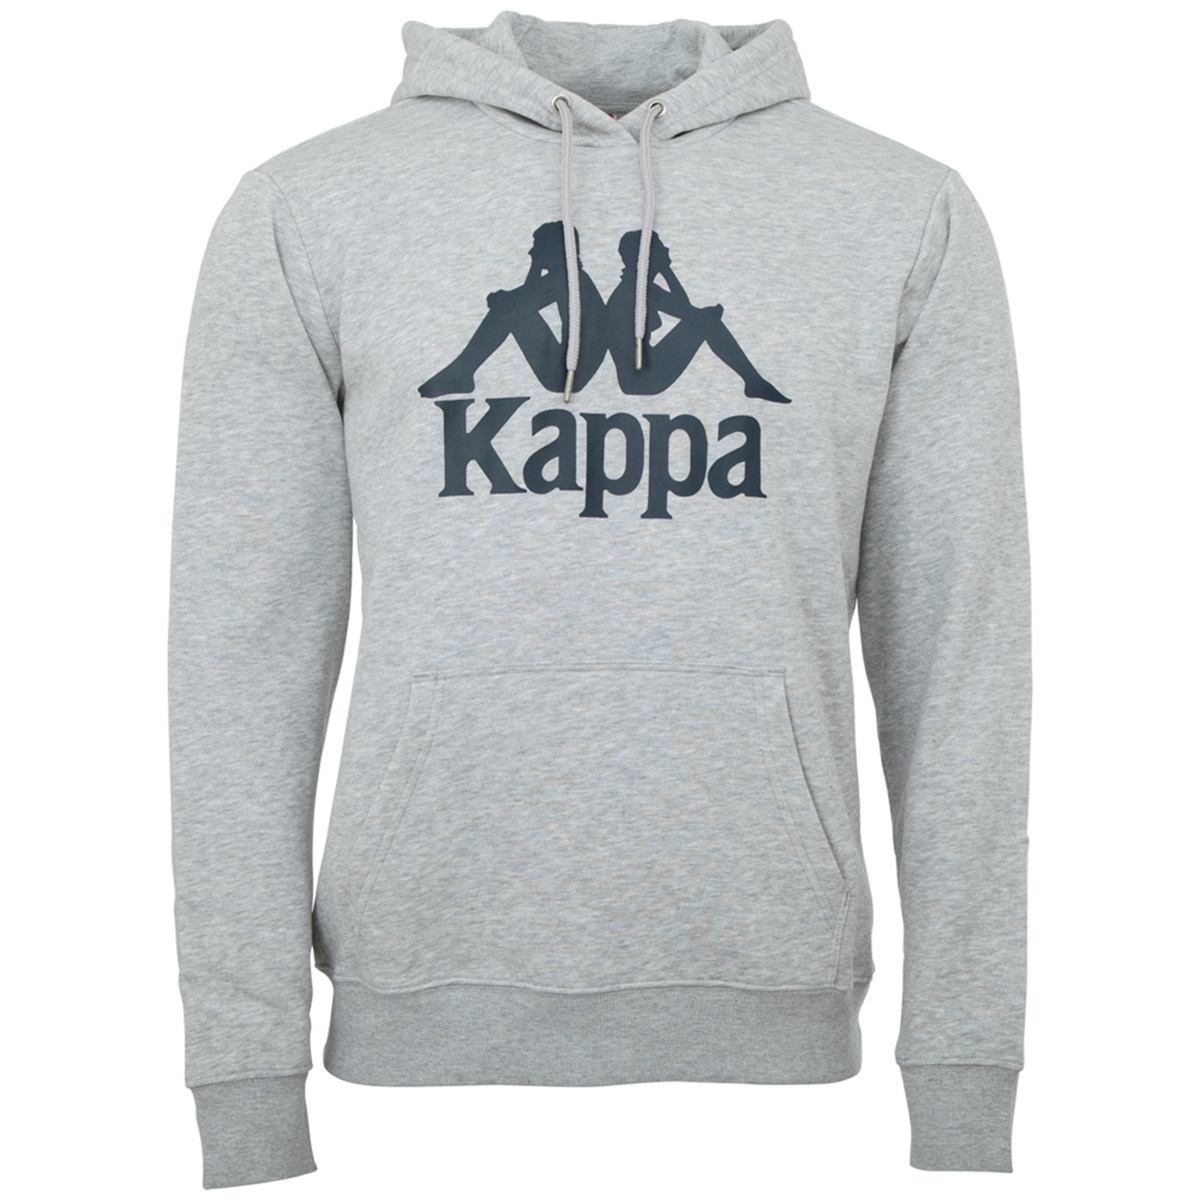 Kappa Unisex Kids Hooded Sweatshirt grey 705322 18M von Kappa